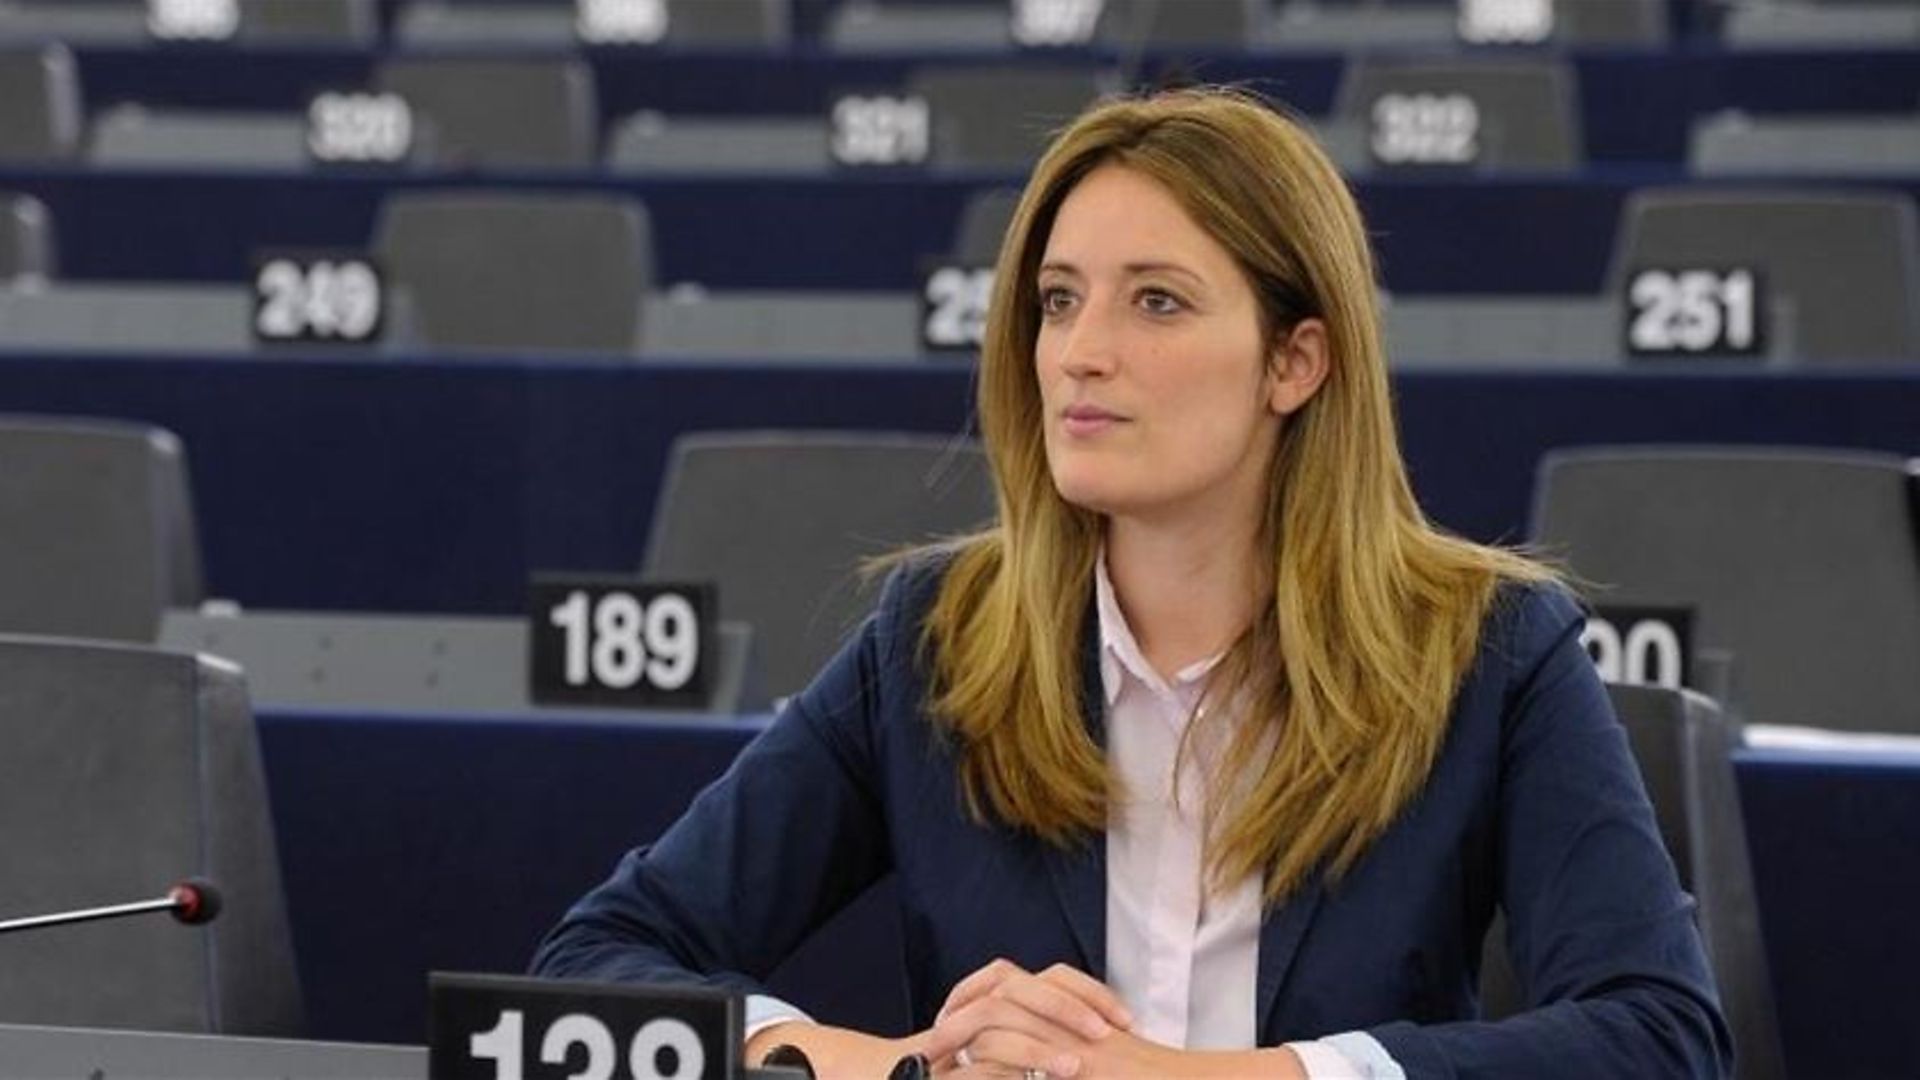 Roberta Metsola in the European Parliament - Credit: European Parliament